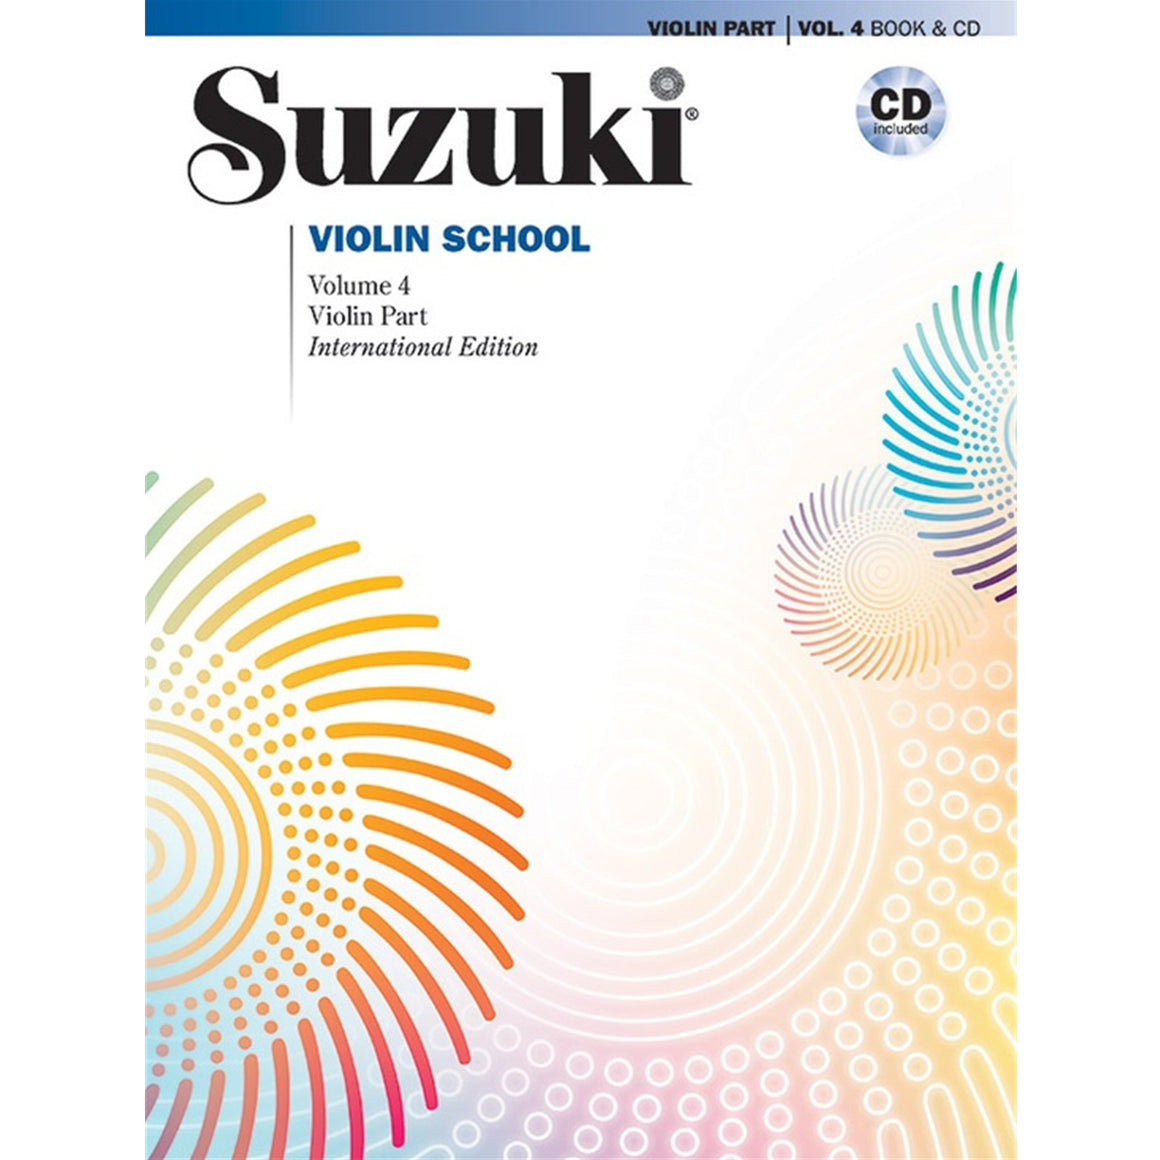 ALFRED 30725 Suzuki Violin School Violin Part & CD, Volume 4 [Violin]